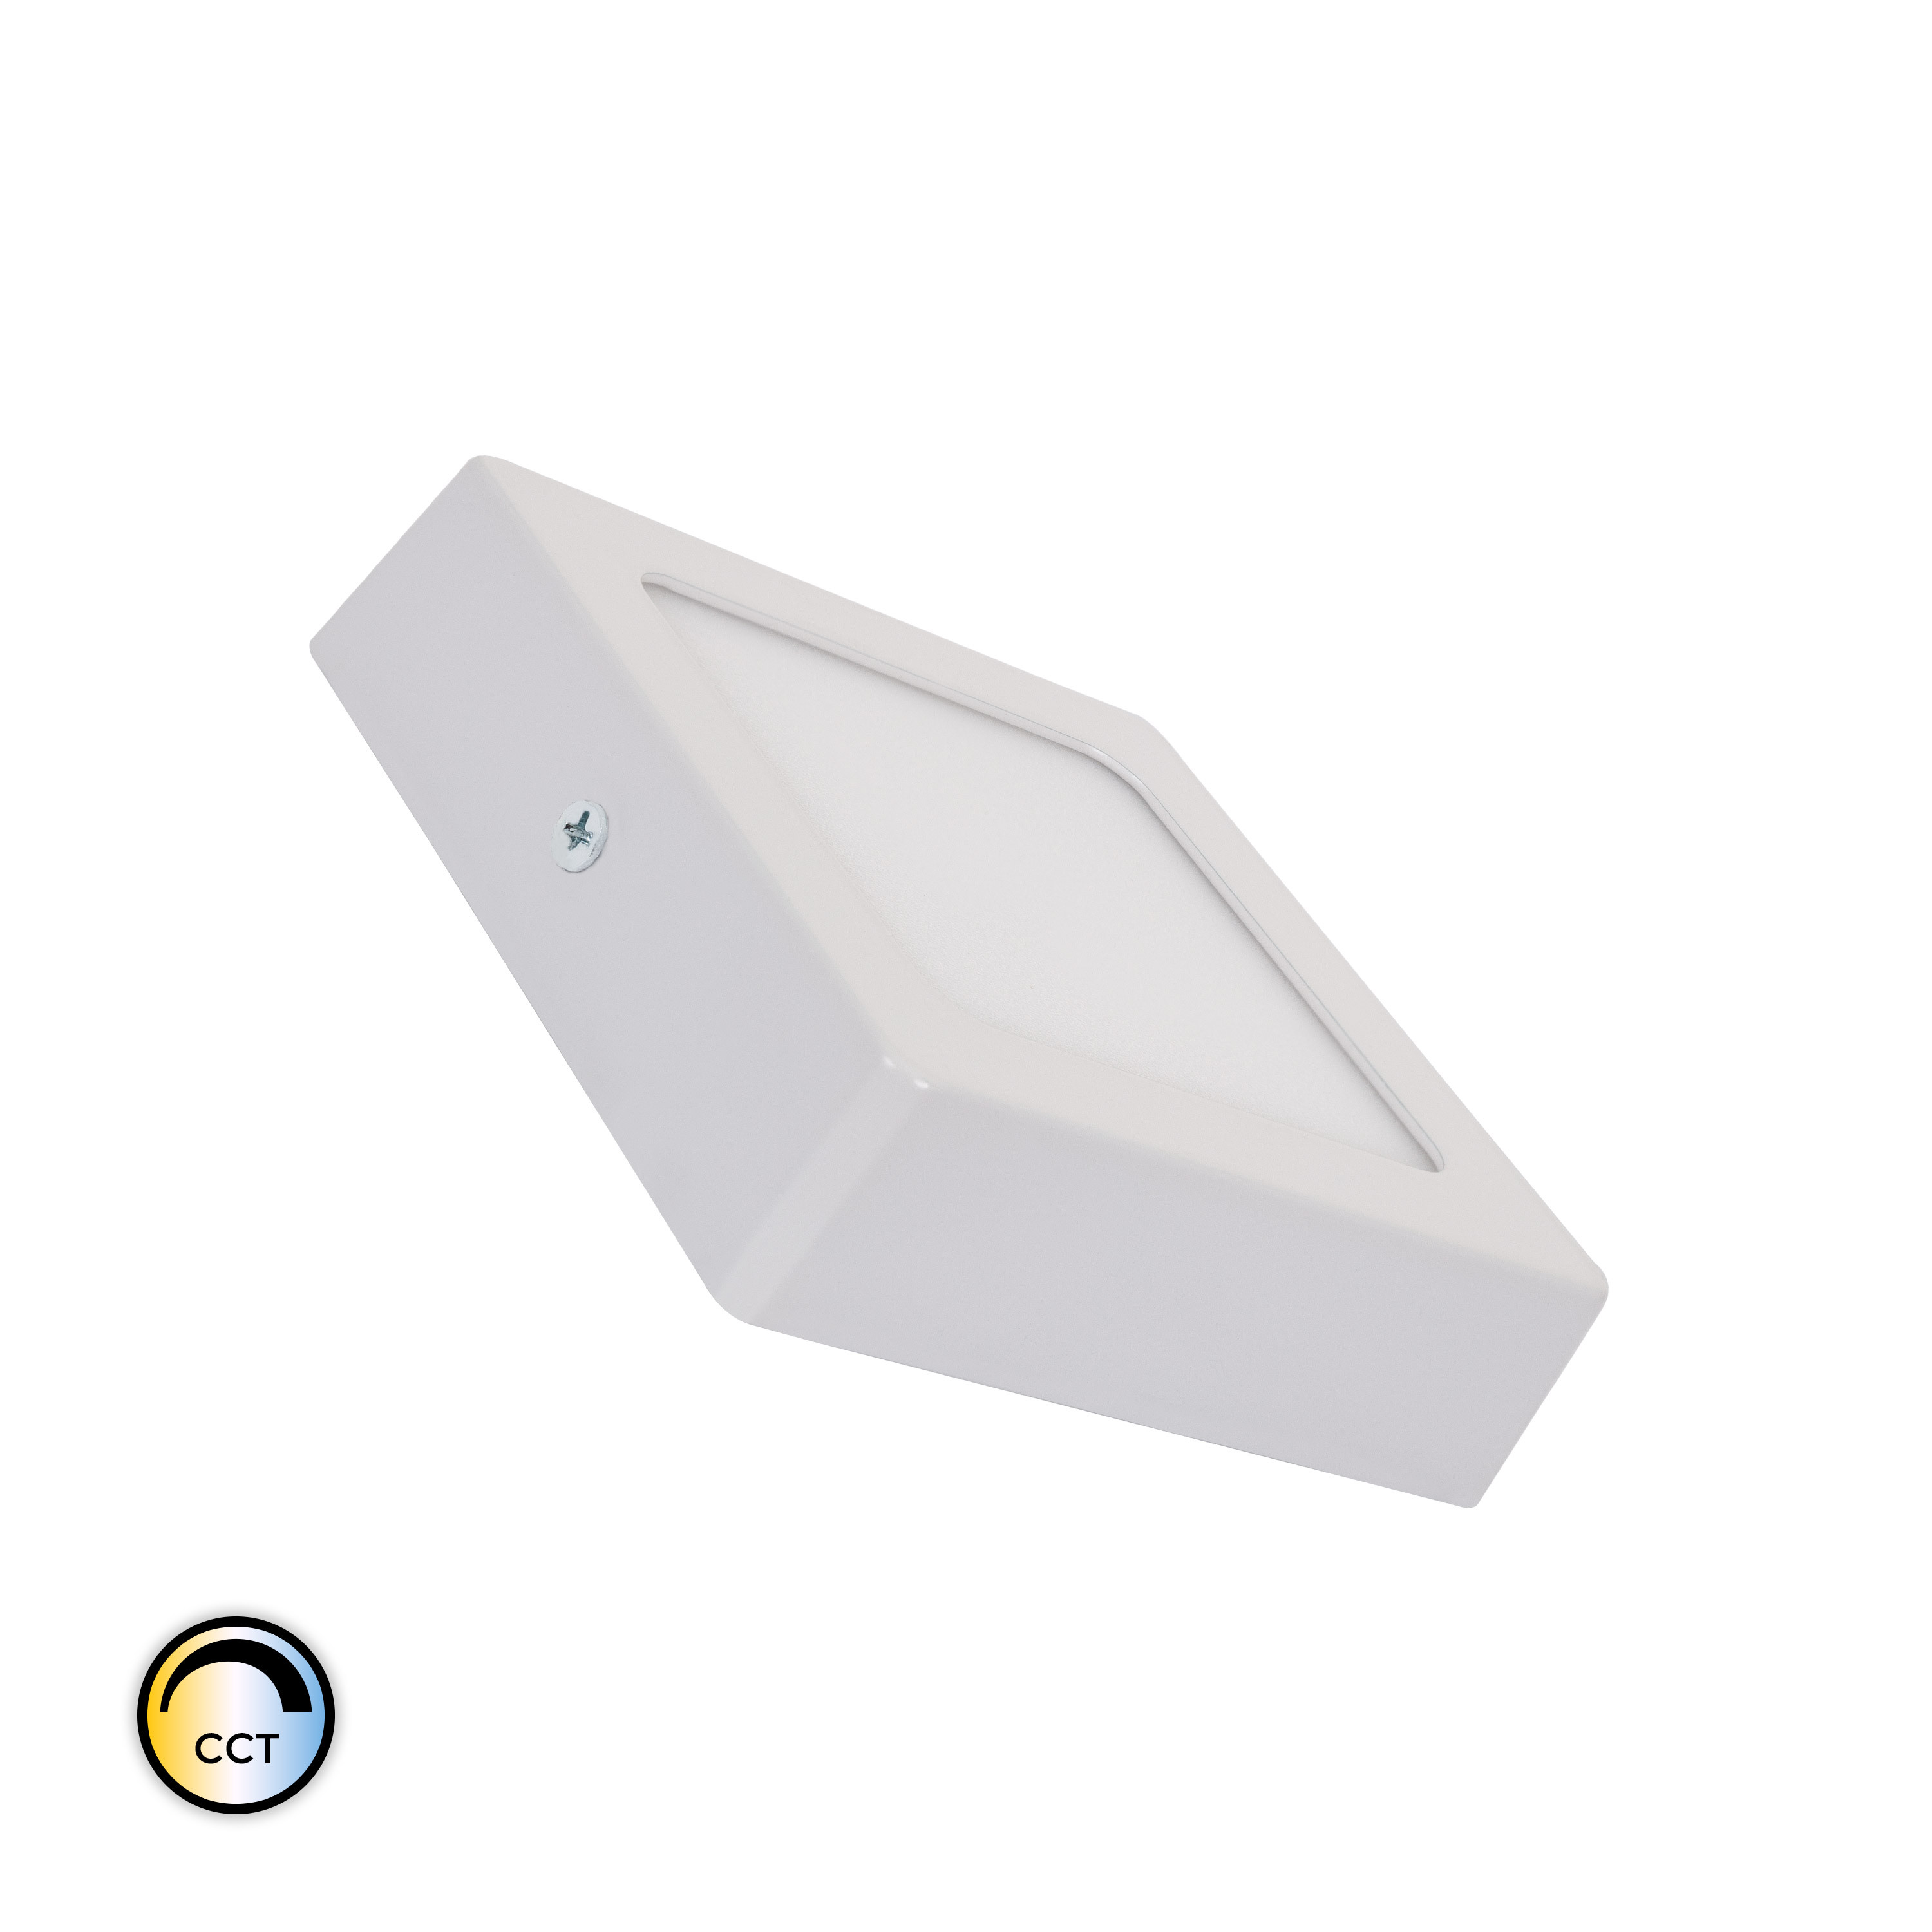 Plafoniera LED 6W Quadrata Superslim CCT Selezionabile 105x105 mm